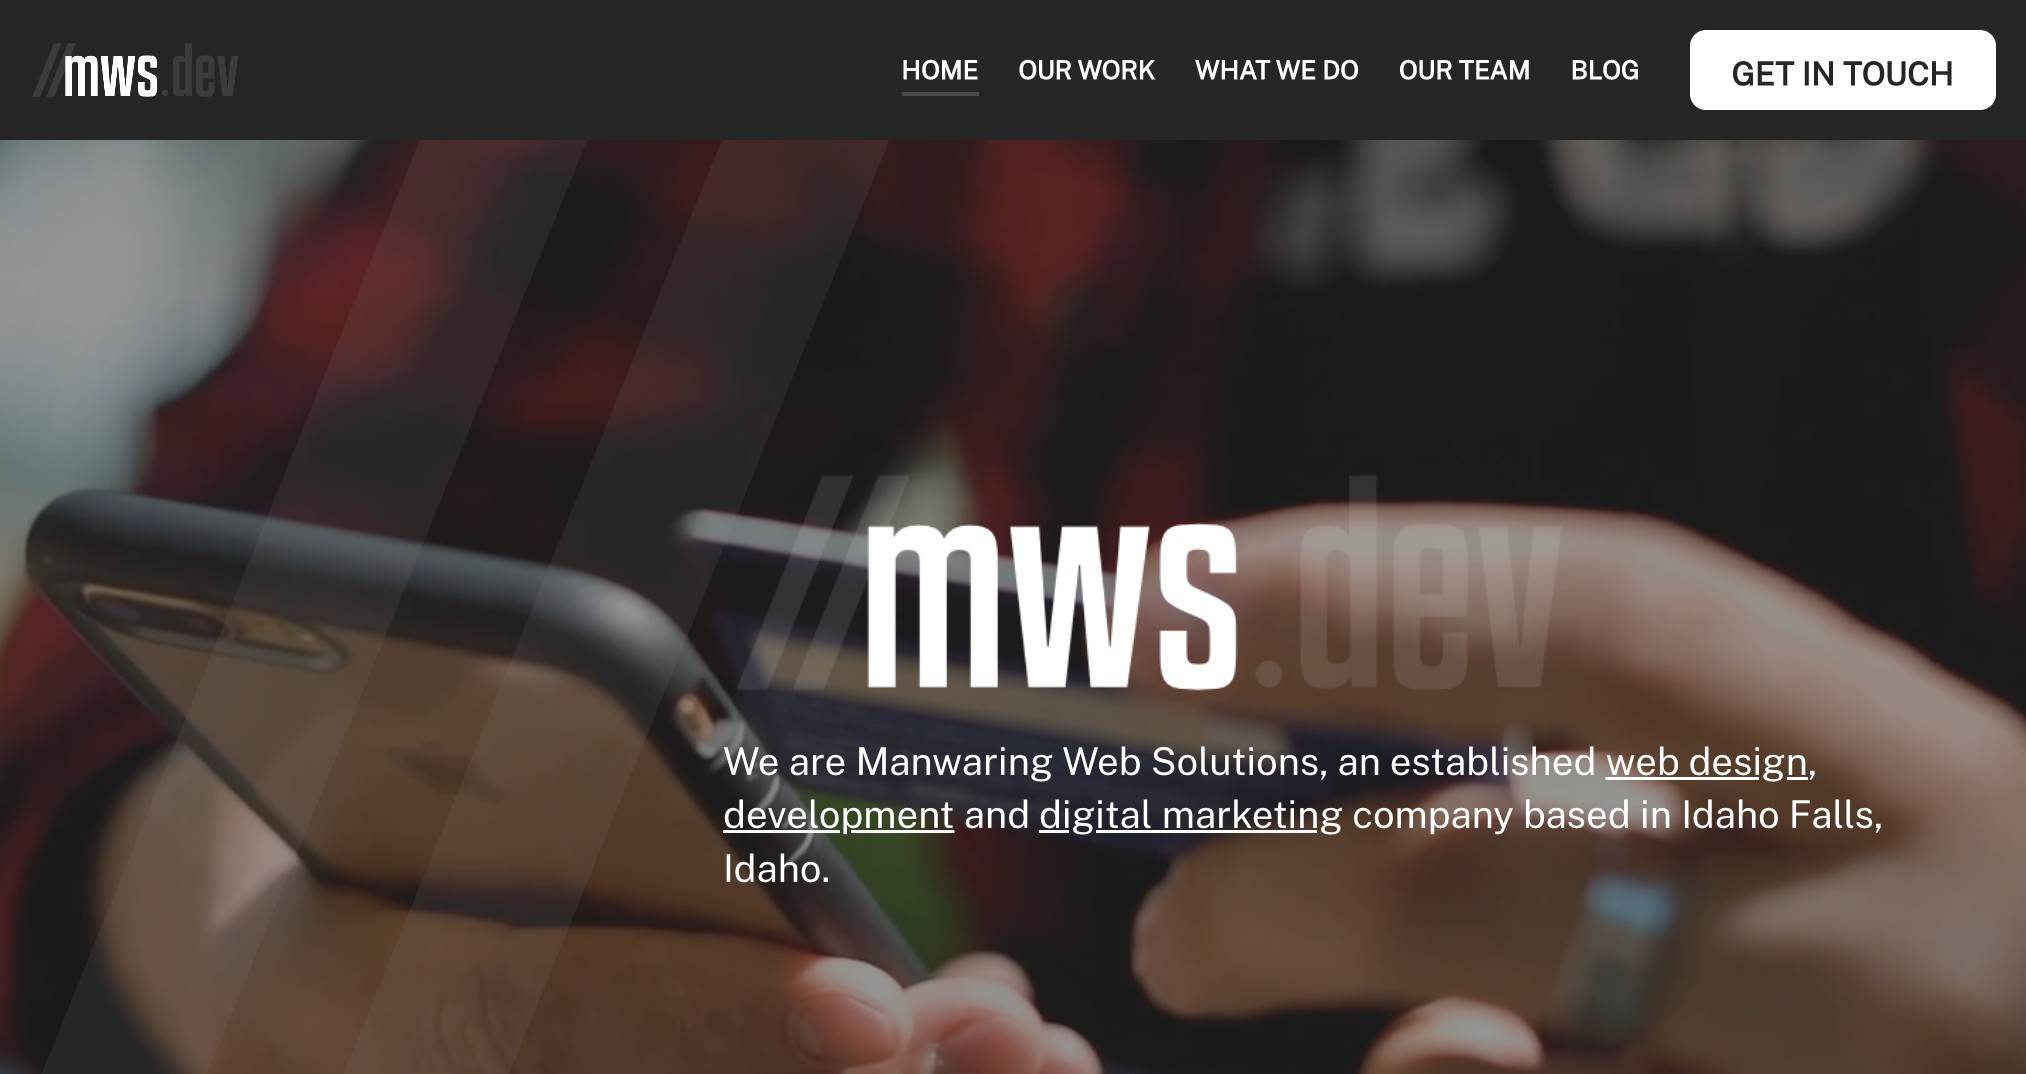 Manwaring Web Solutions, Inc